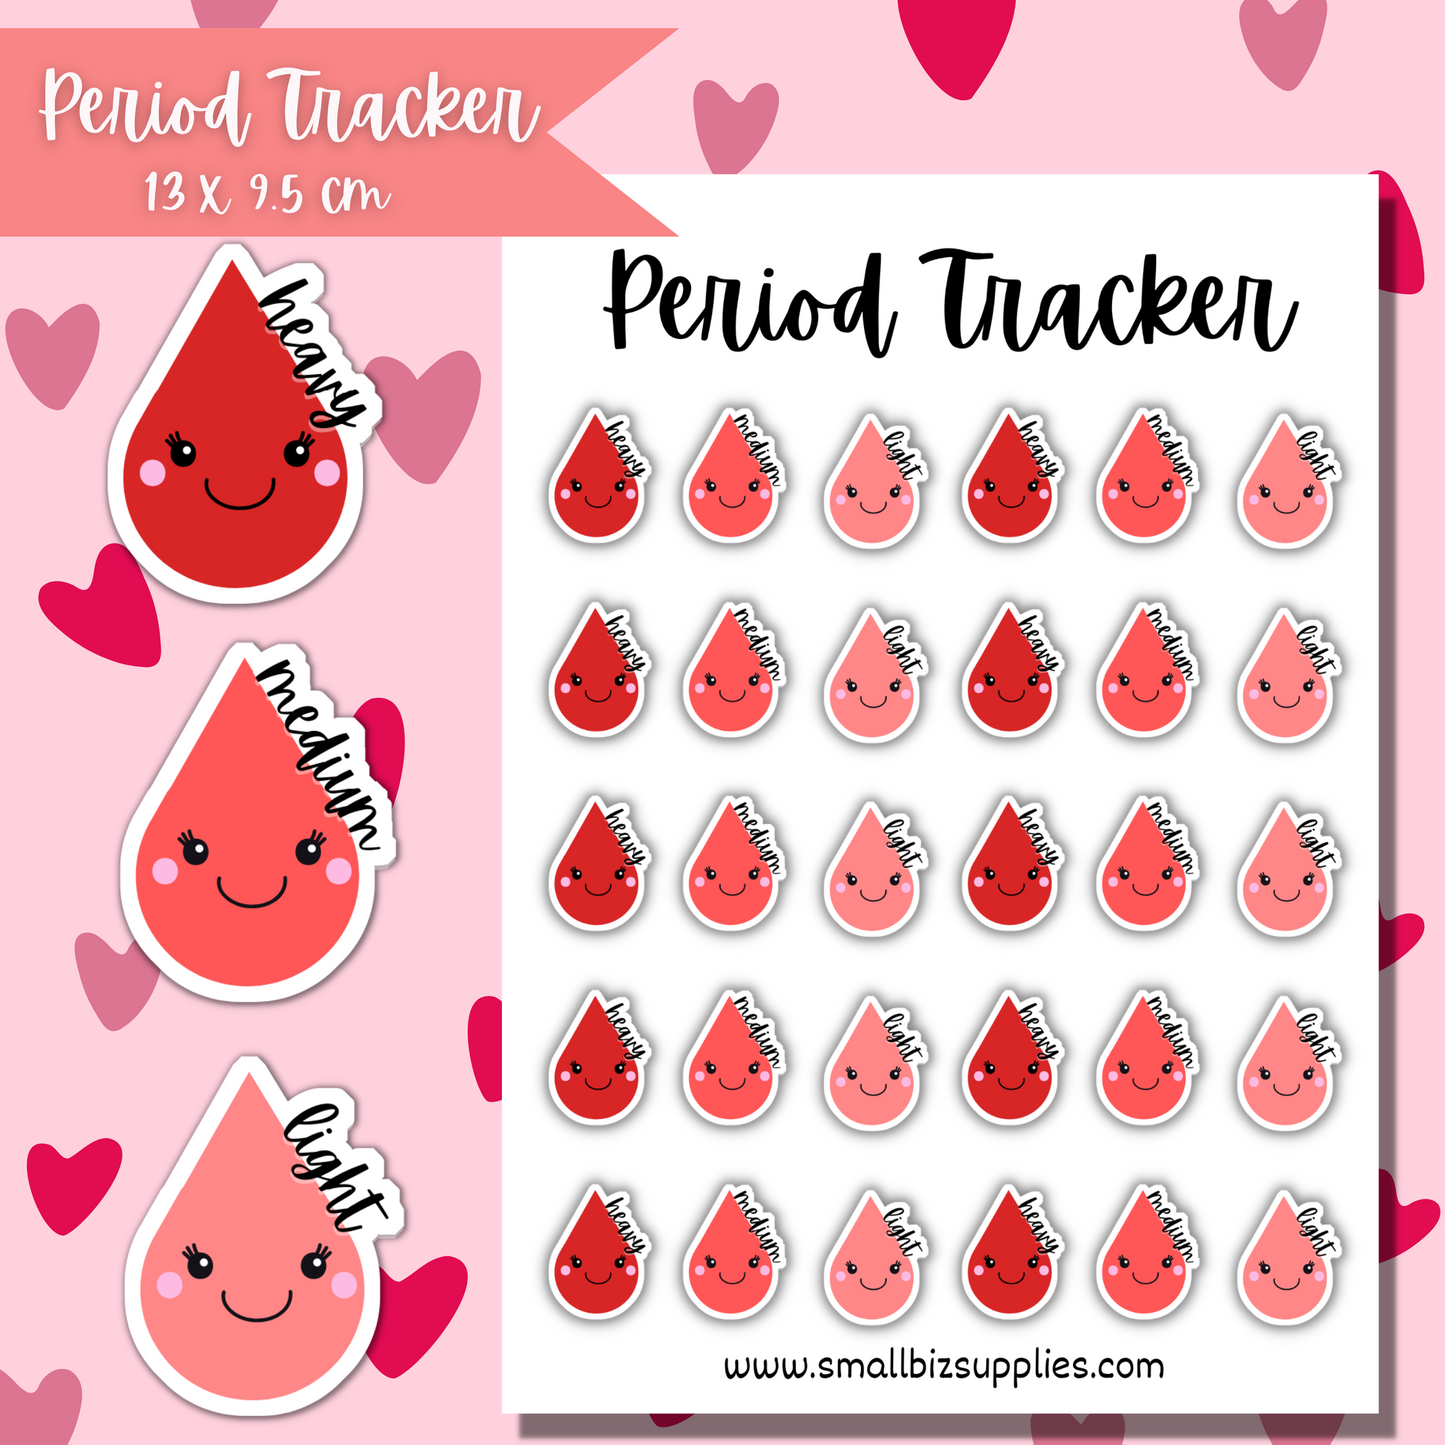 Period Tracker Planner Stickers